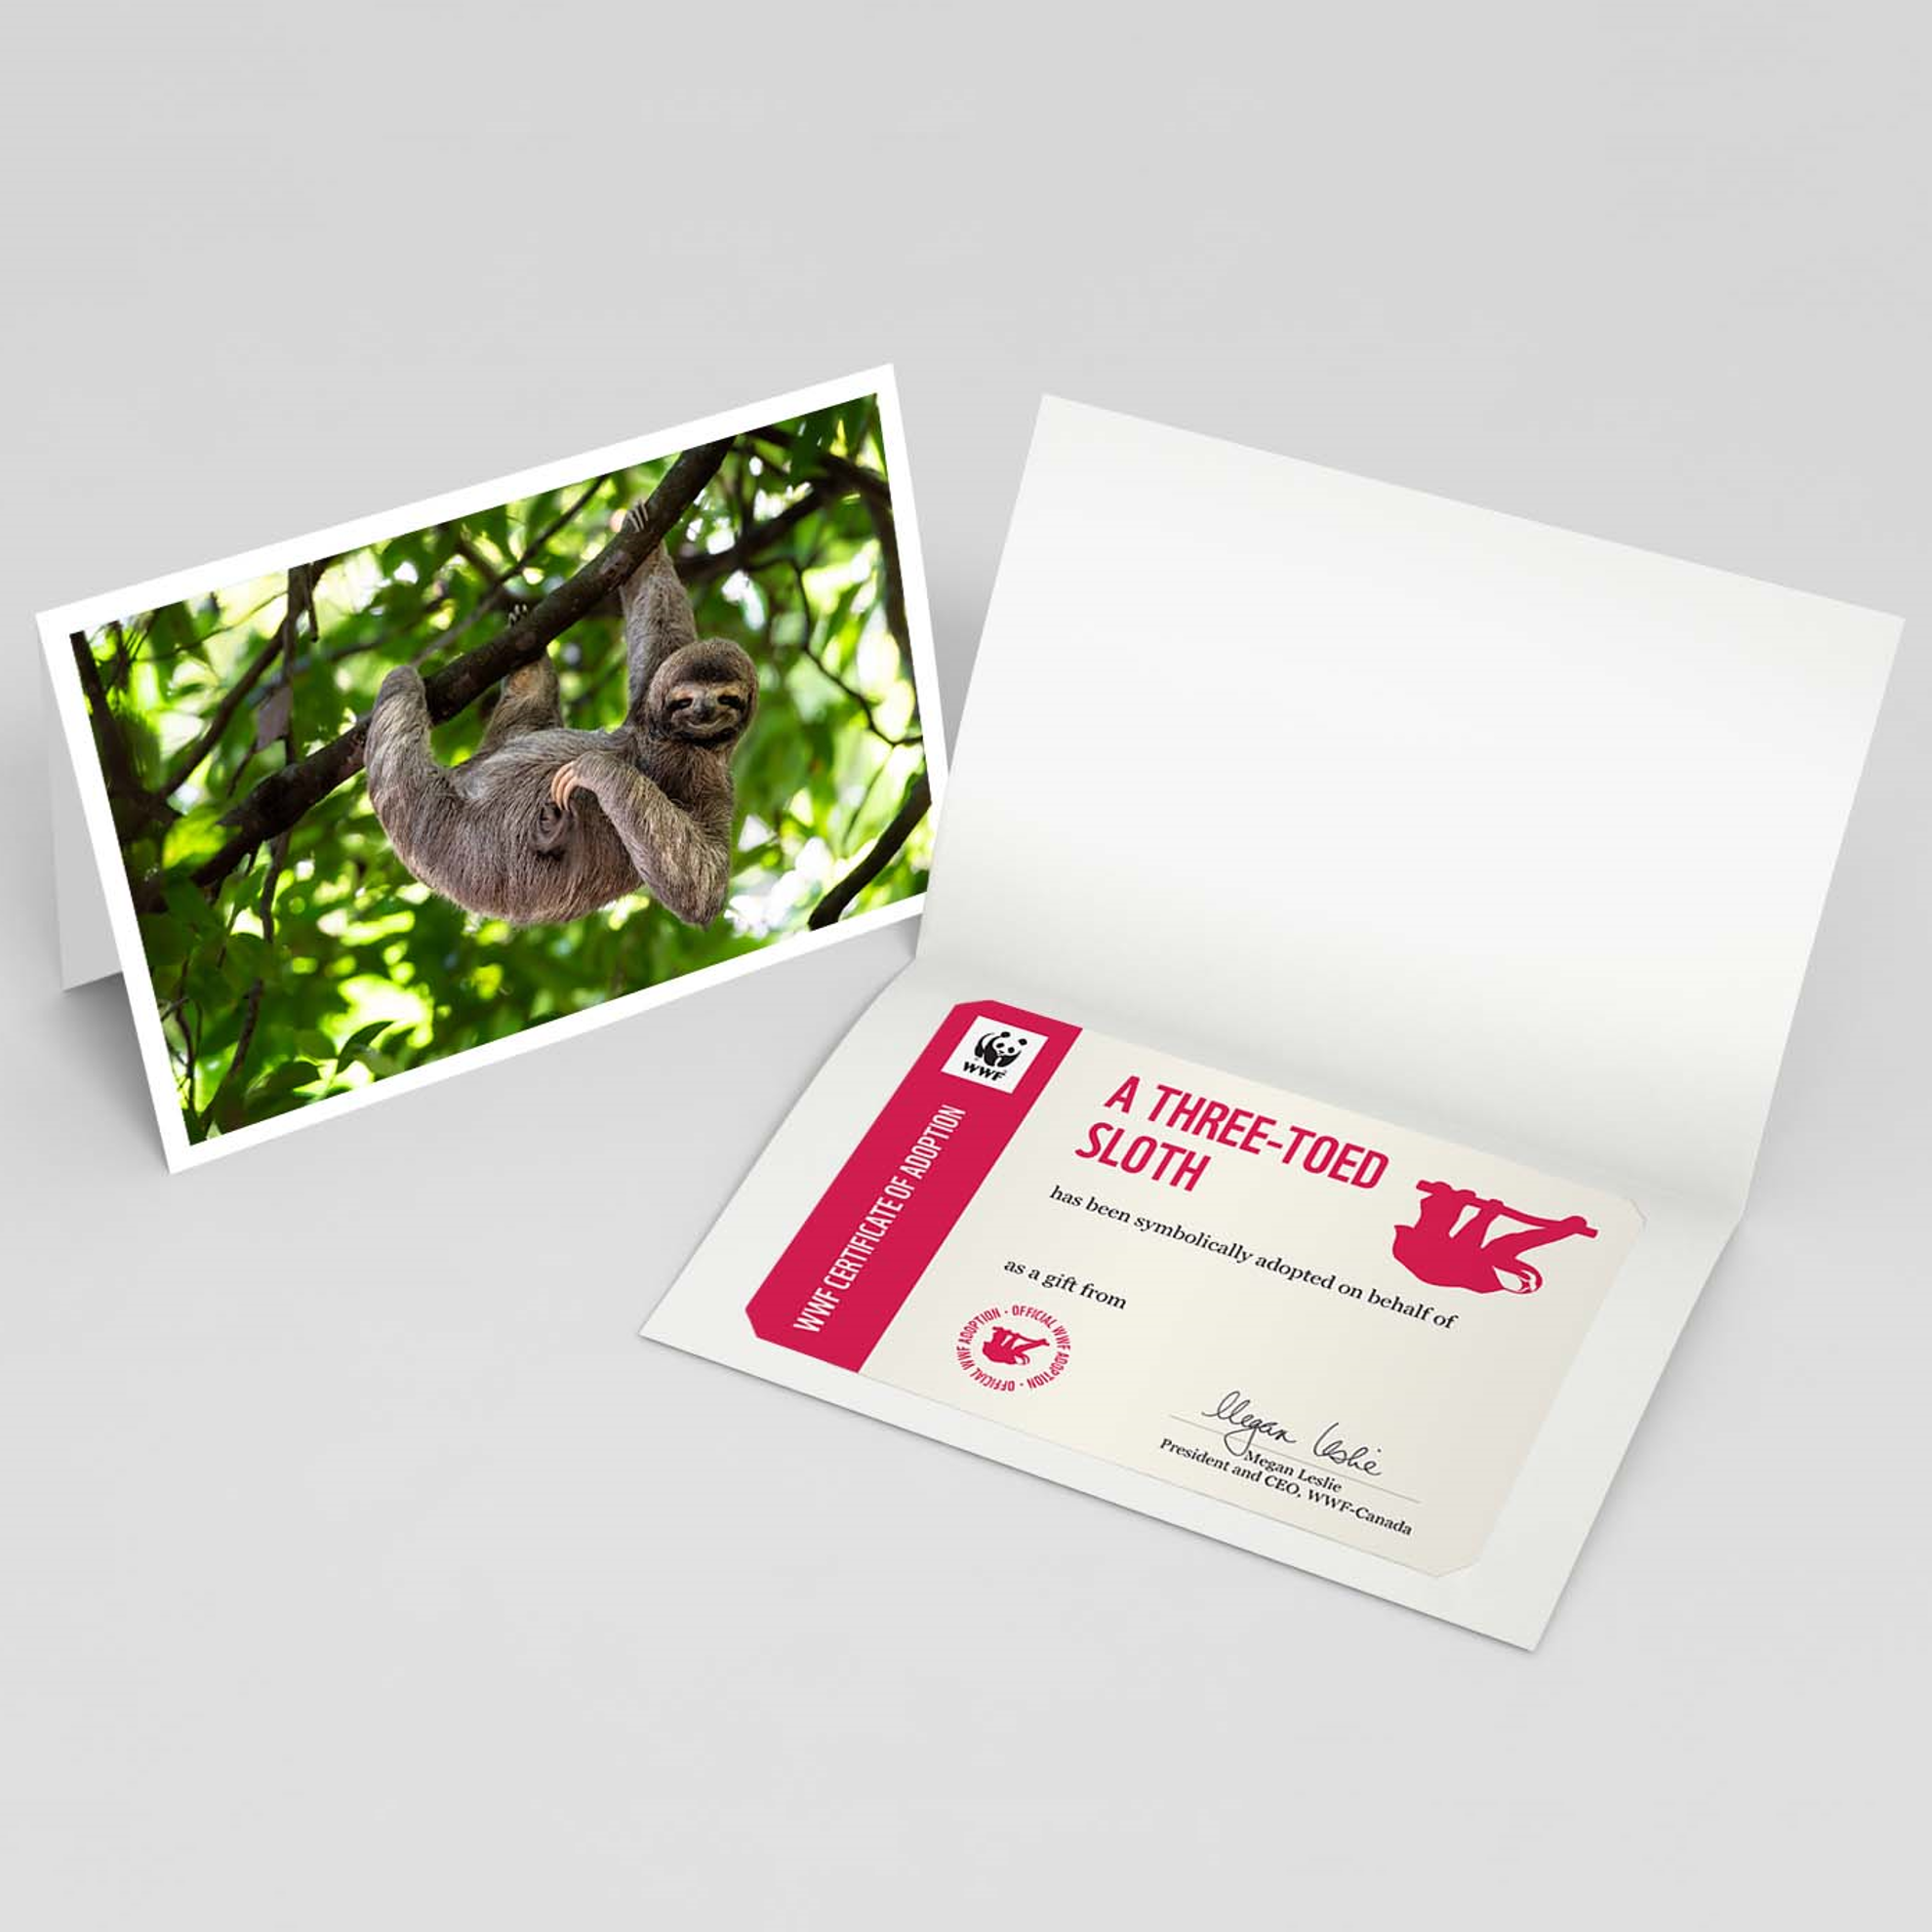 Three-toed sloth adoption card - WWF-Canada